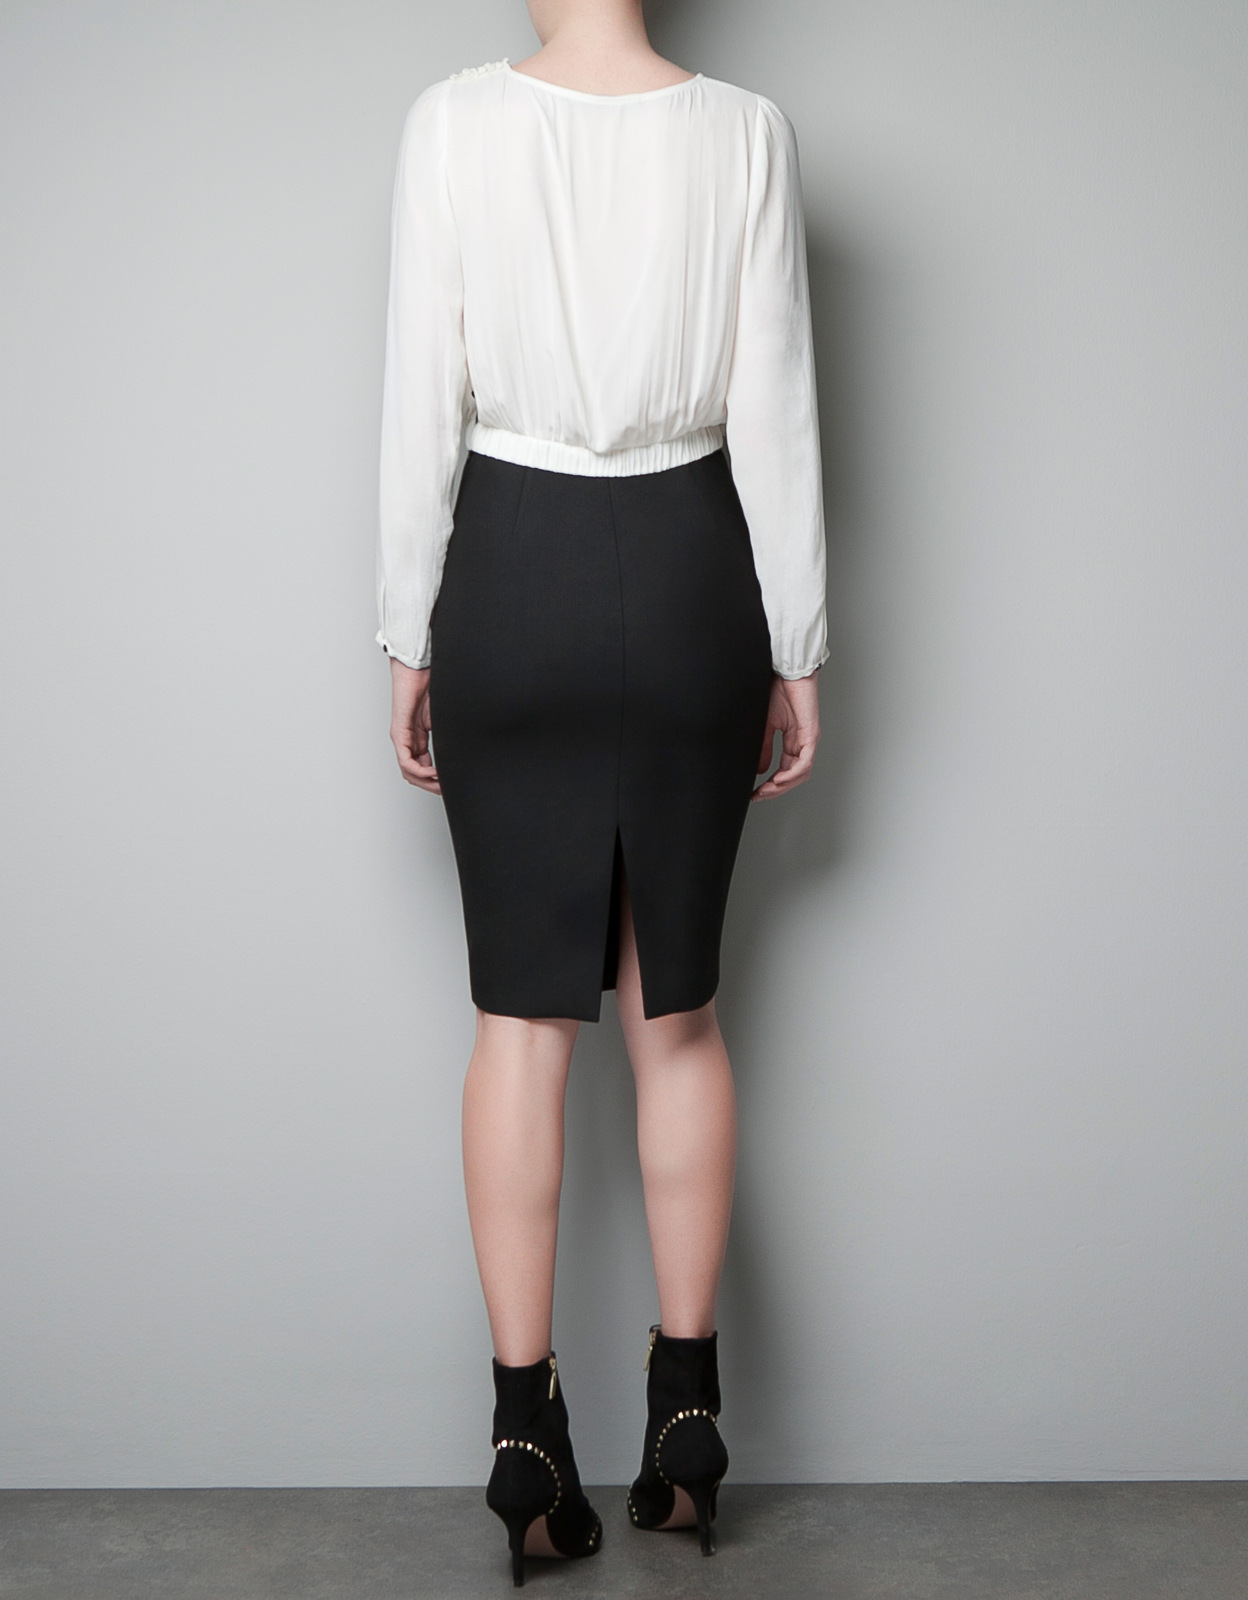 Zara fekete-fehér ruha 2012 fotója